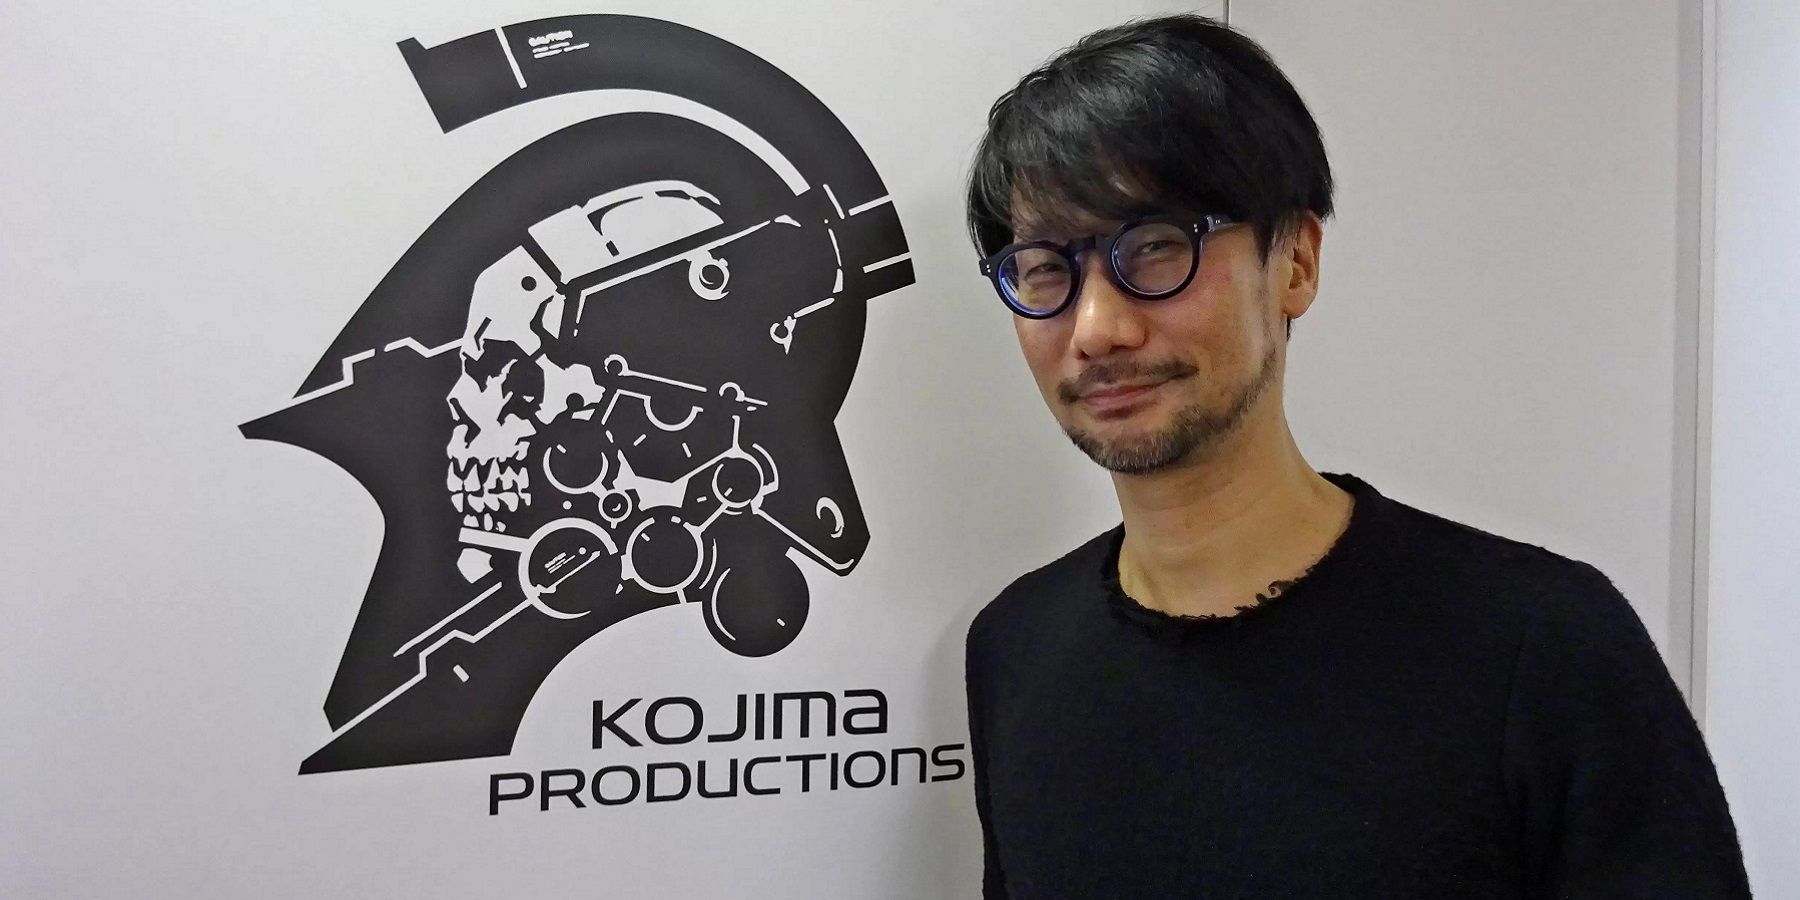 Photo of Hideo Kojima in front of the Kojima Productions logo.